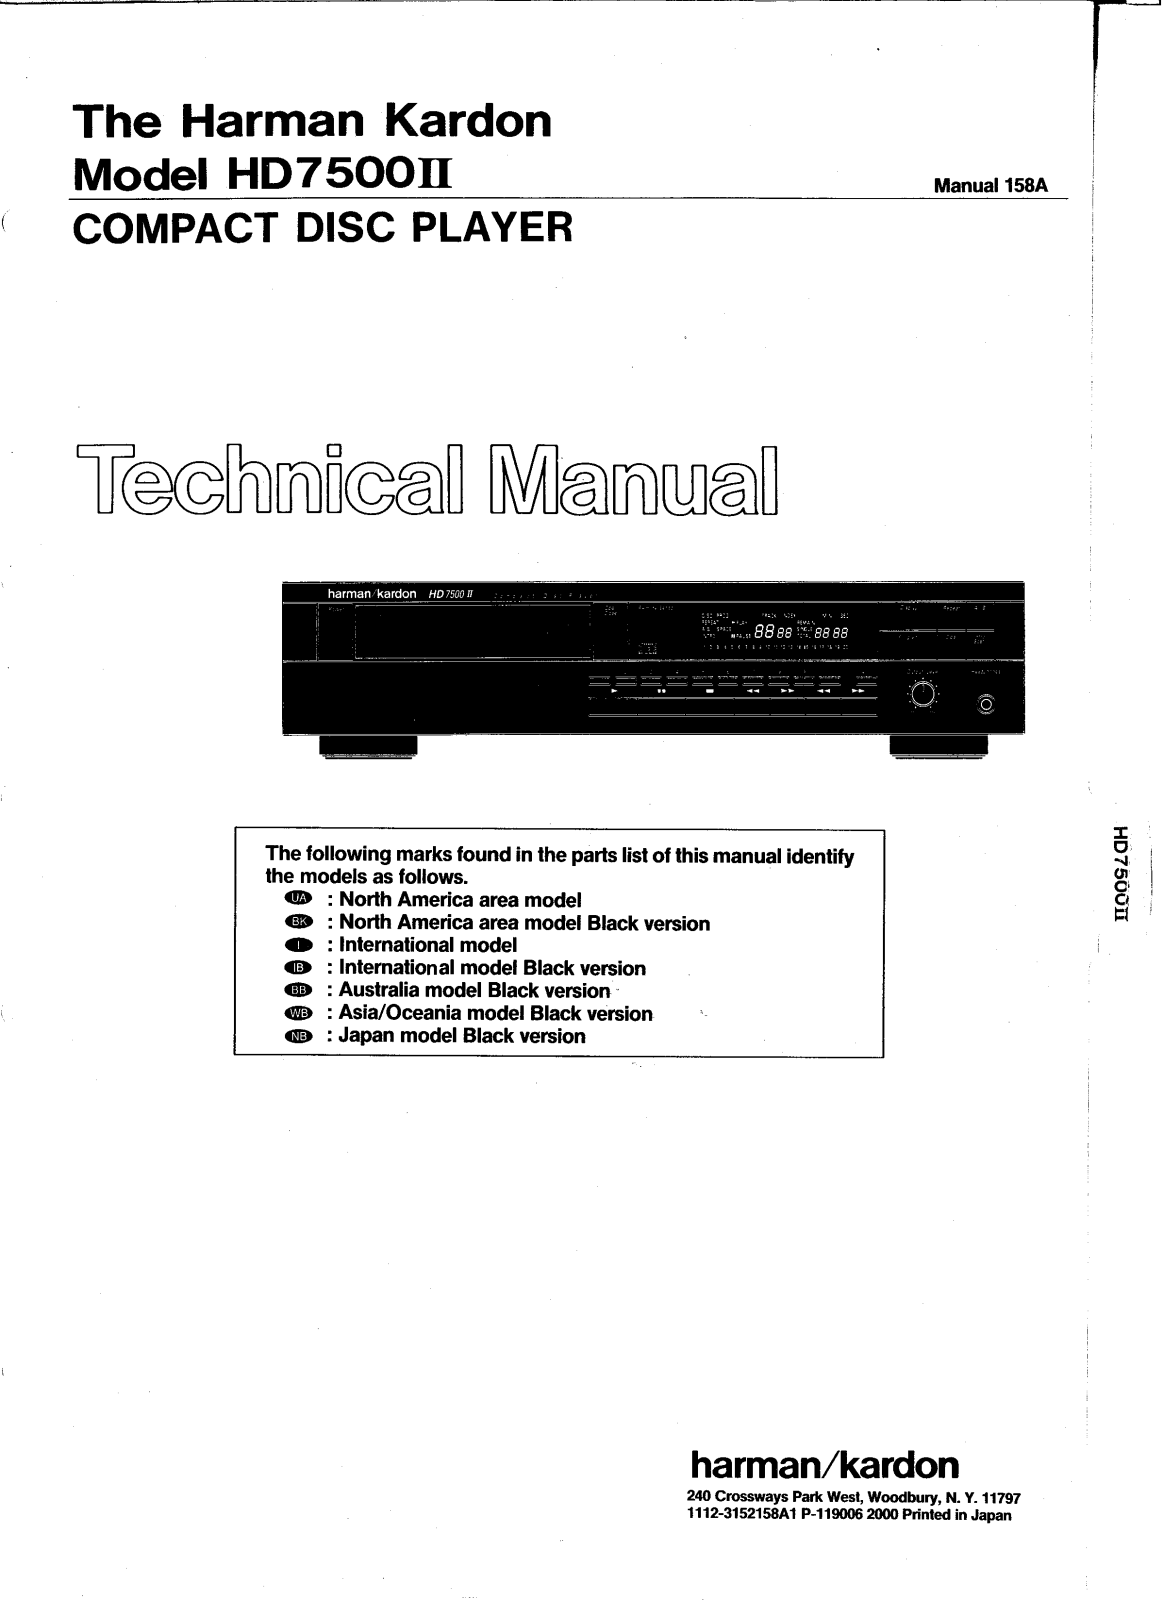 Harman Kardon HD7500II Technical Manual